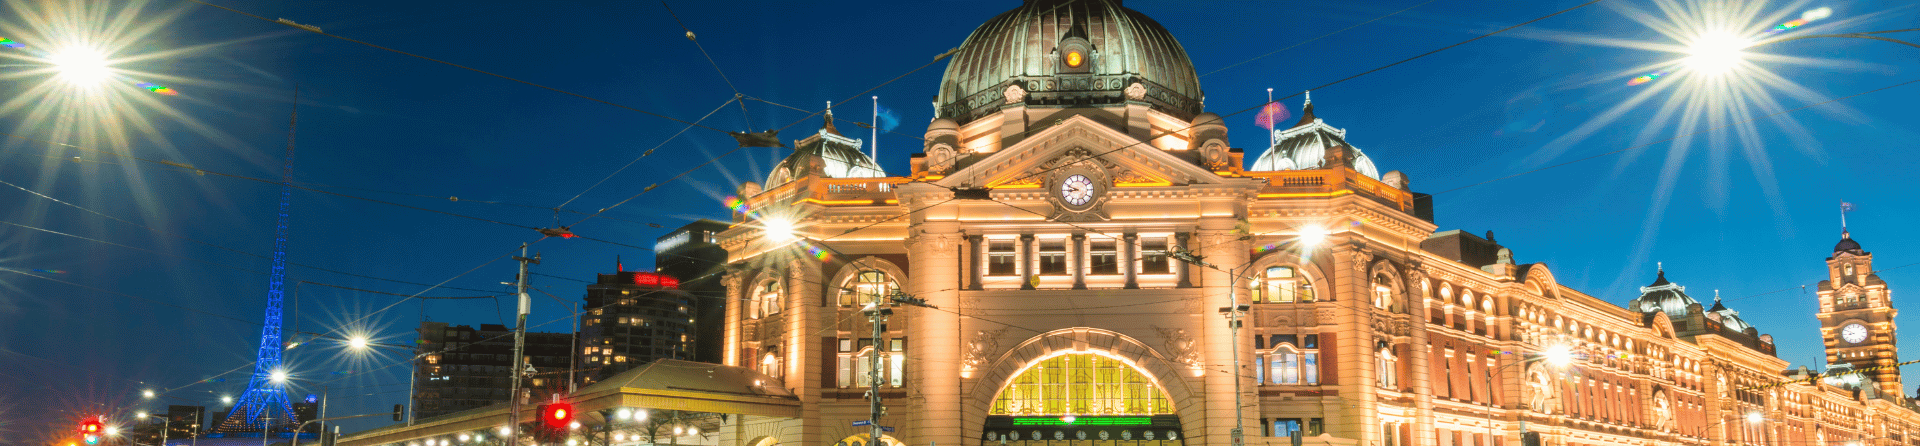 When was Flinders Street Station built?